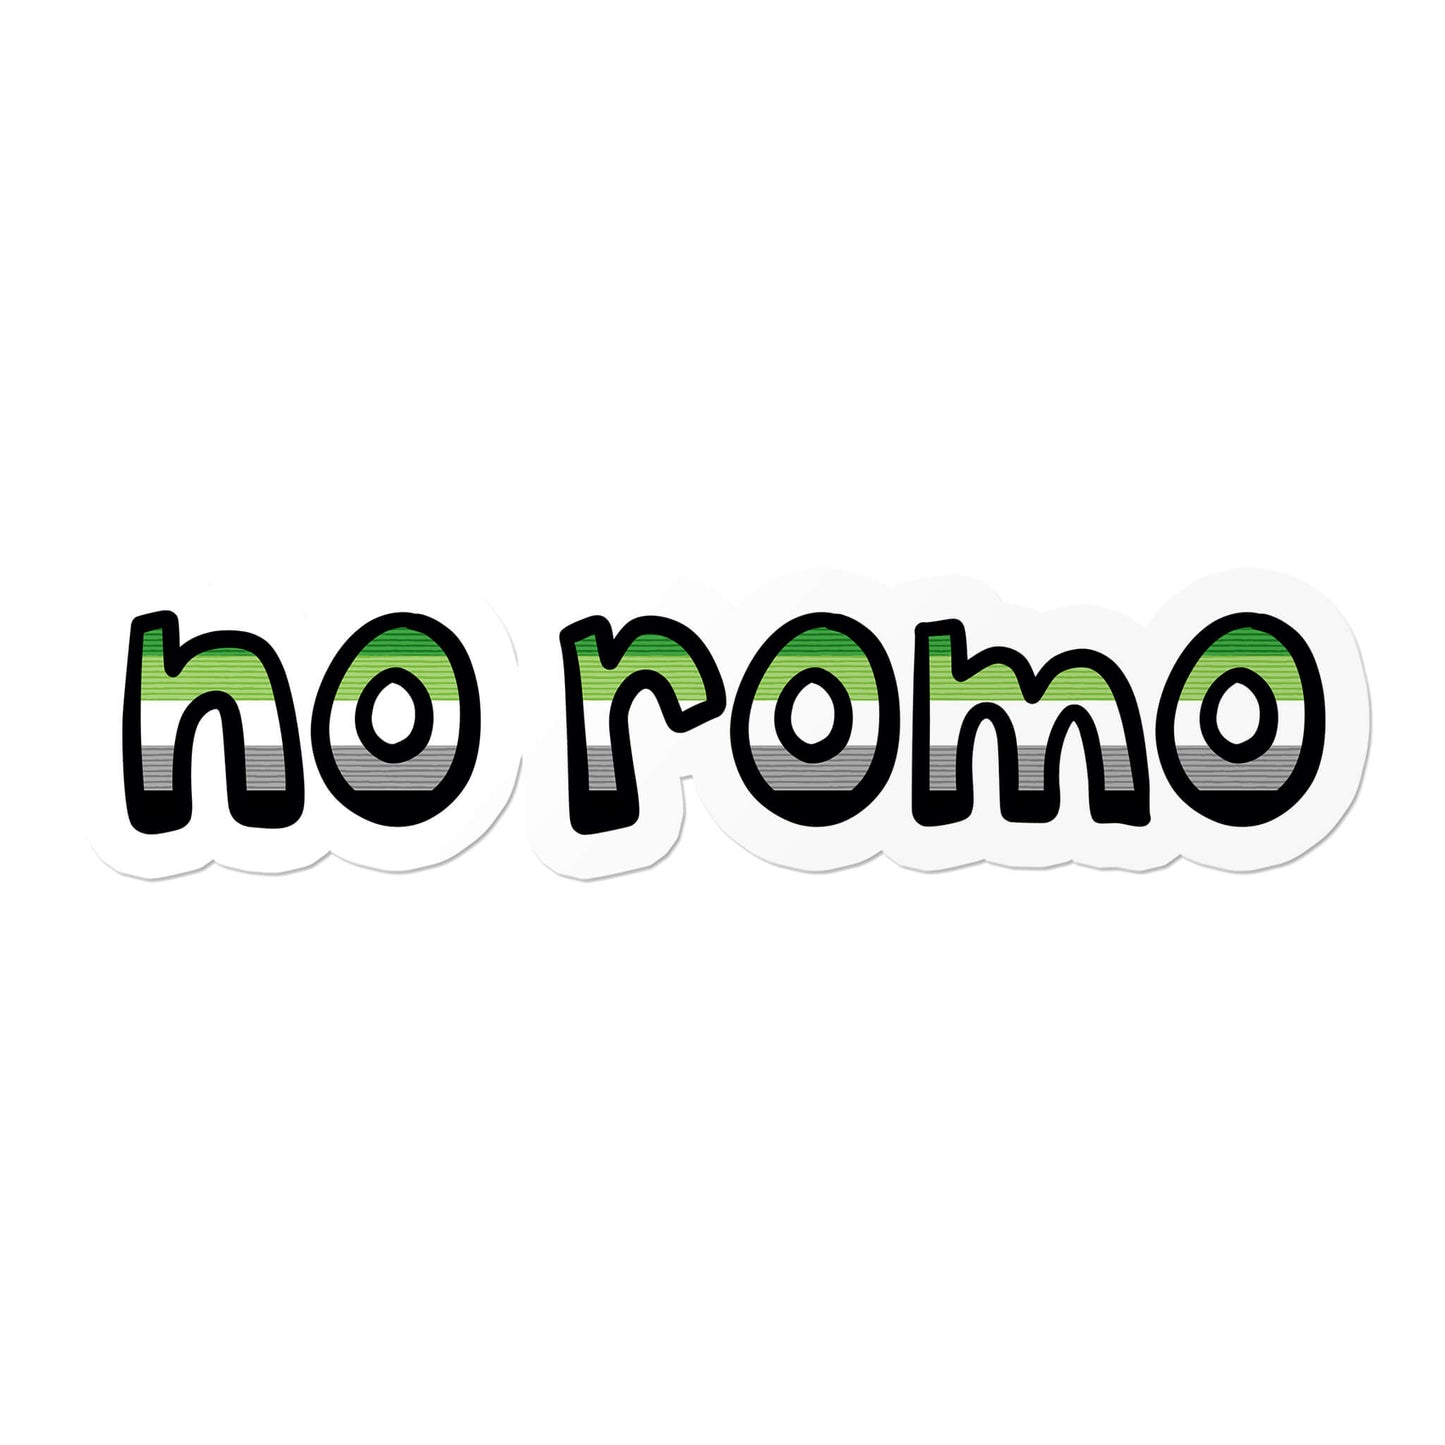 Aromantic No Romo Sticker